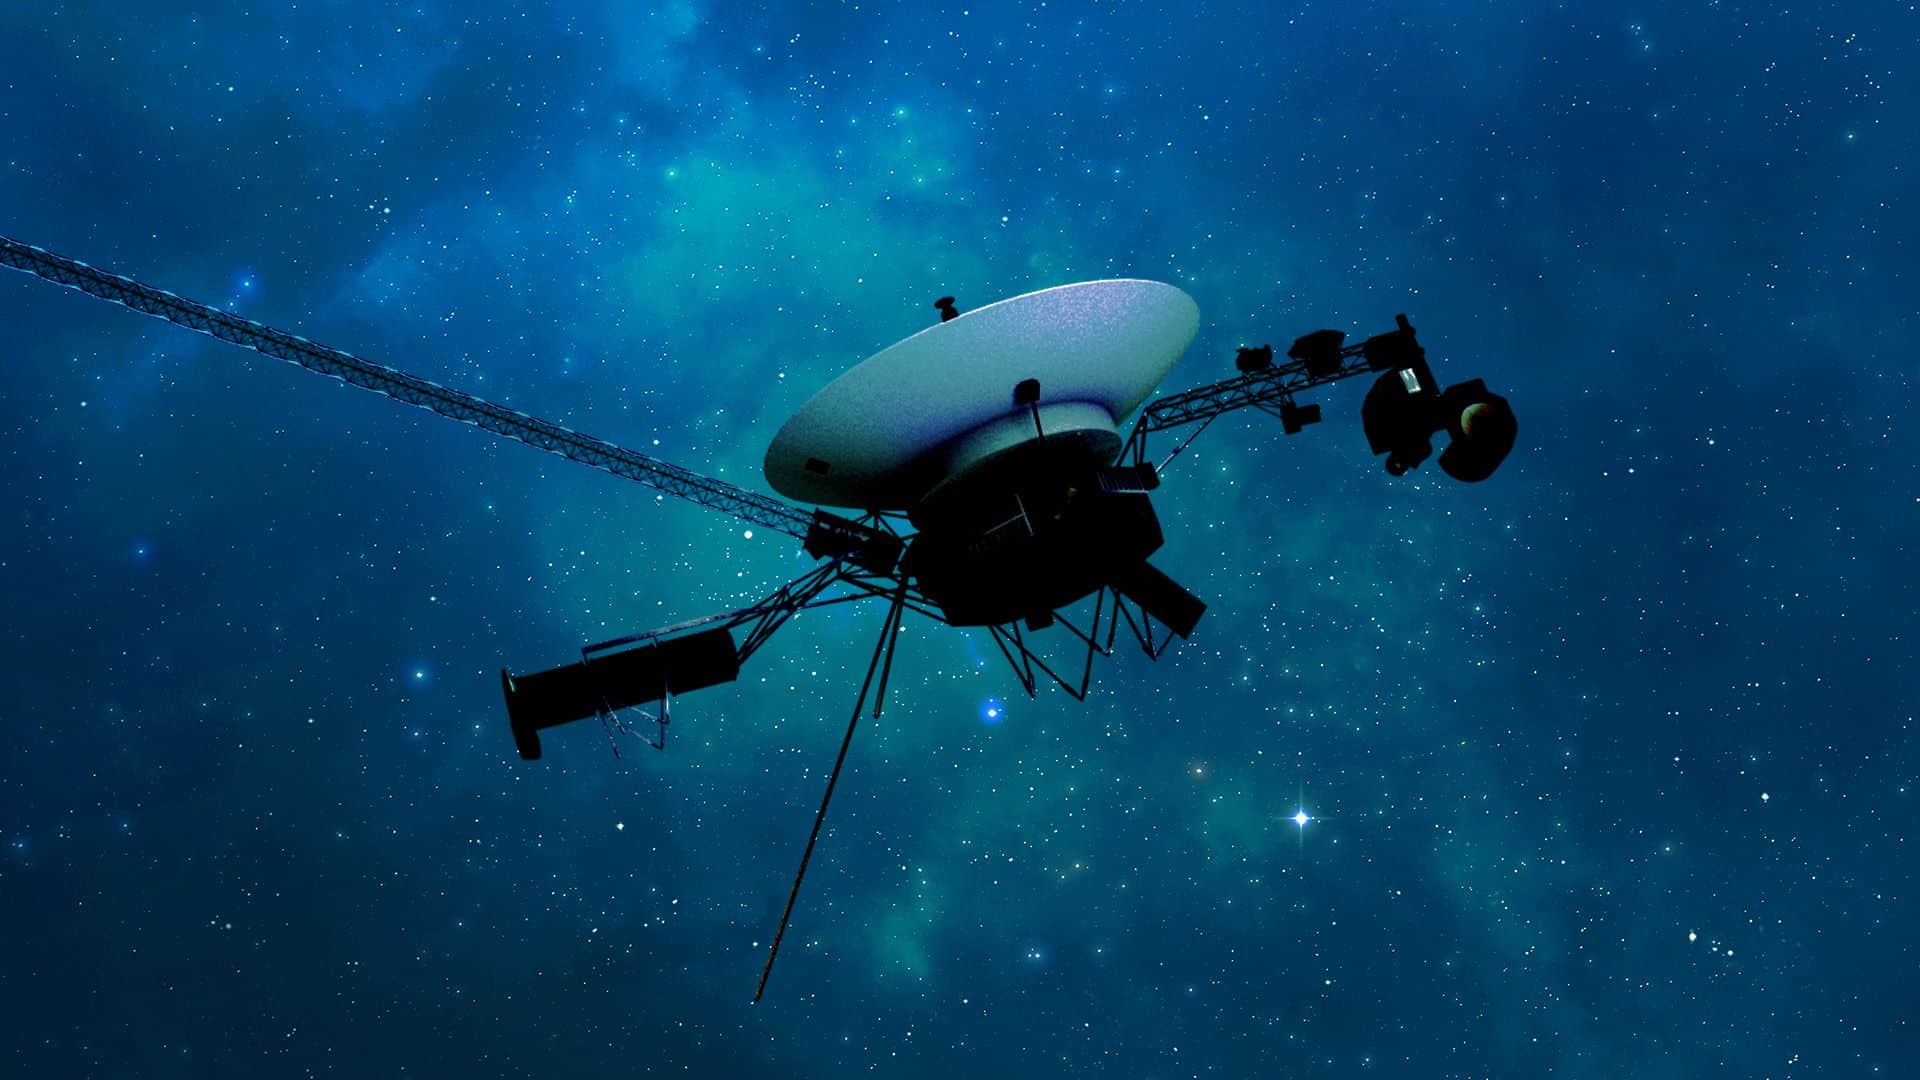 NASA’s Voyager 1 spacecraft